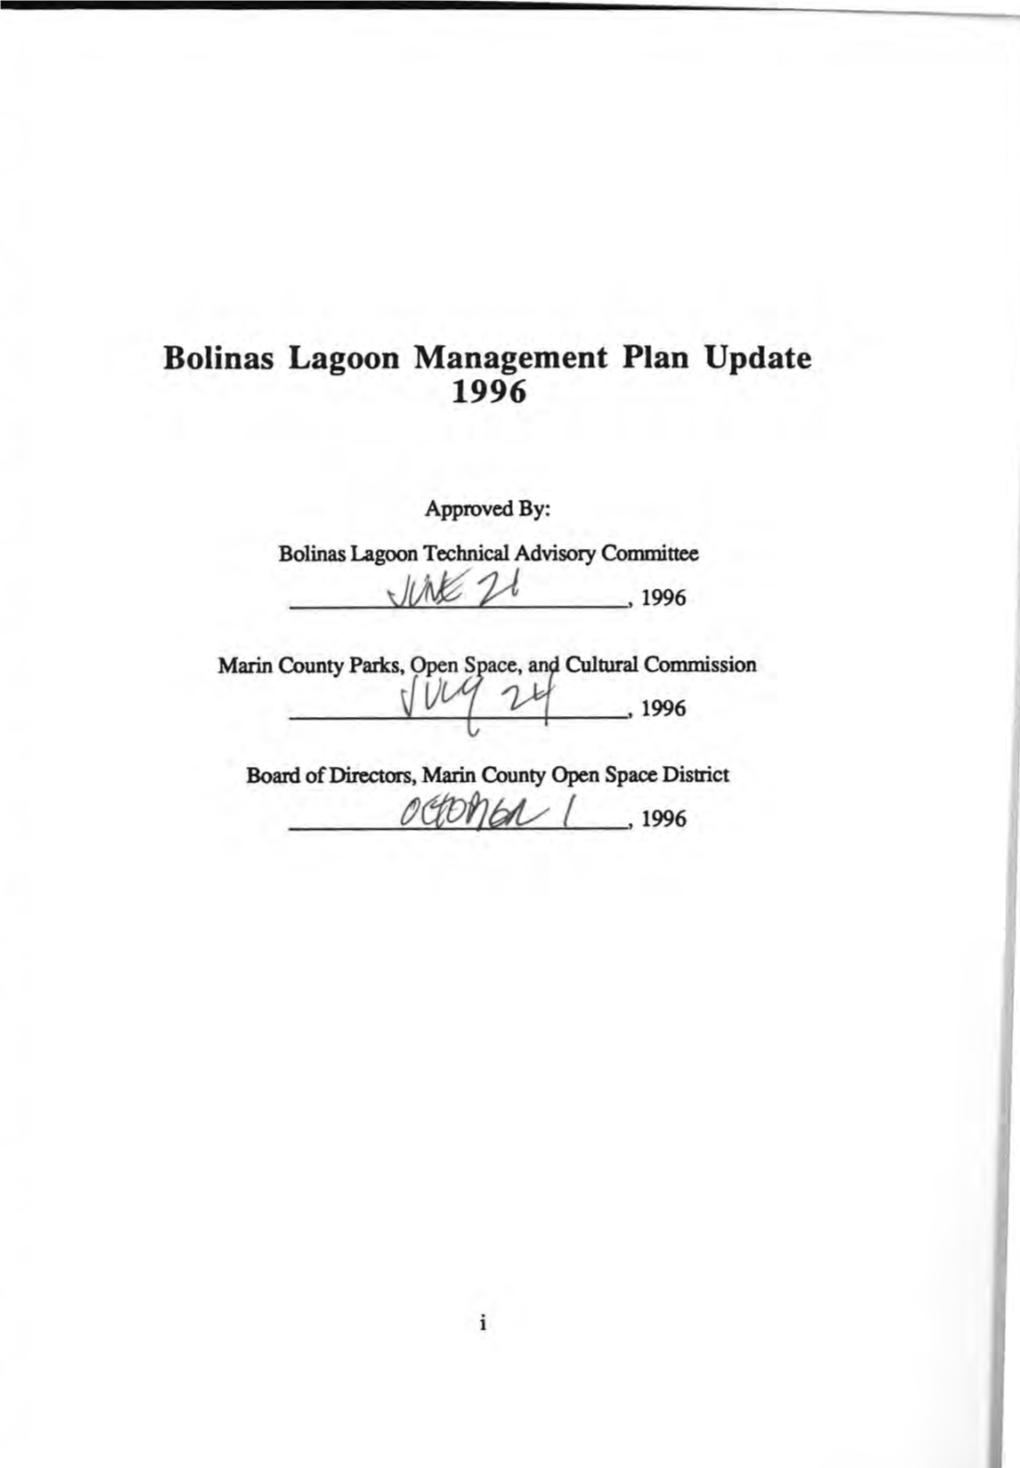 1996: Bolinas Lagoon Management Plan Update